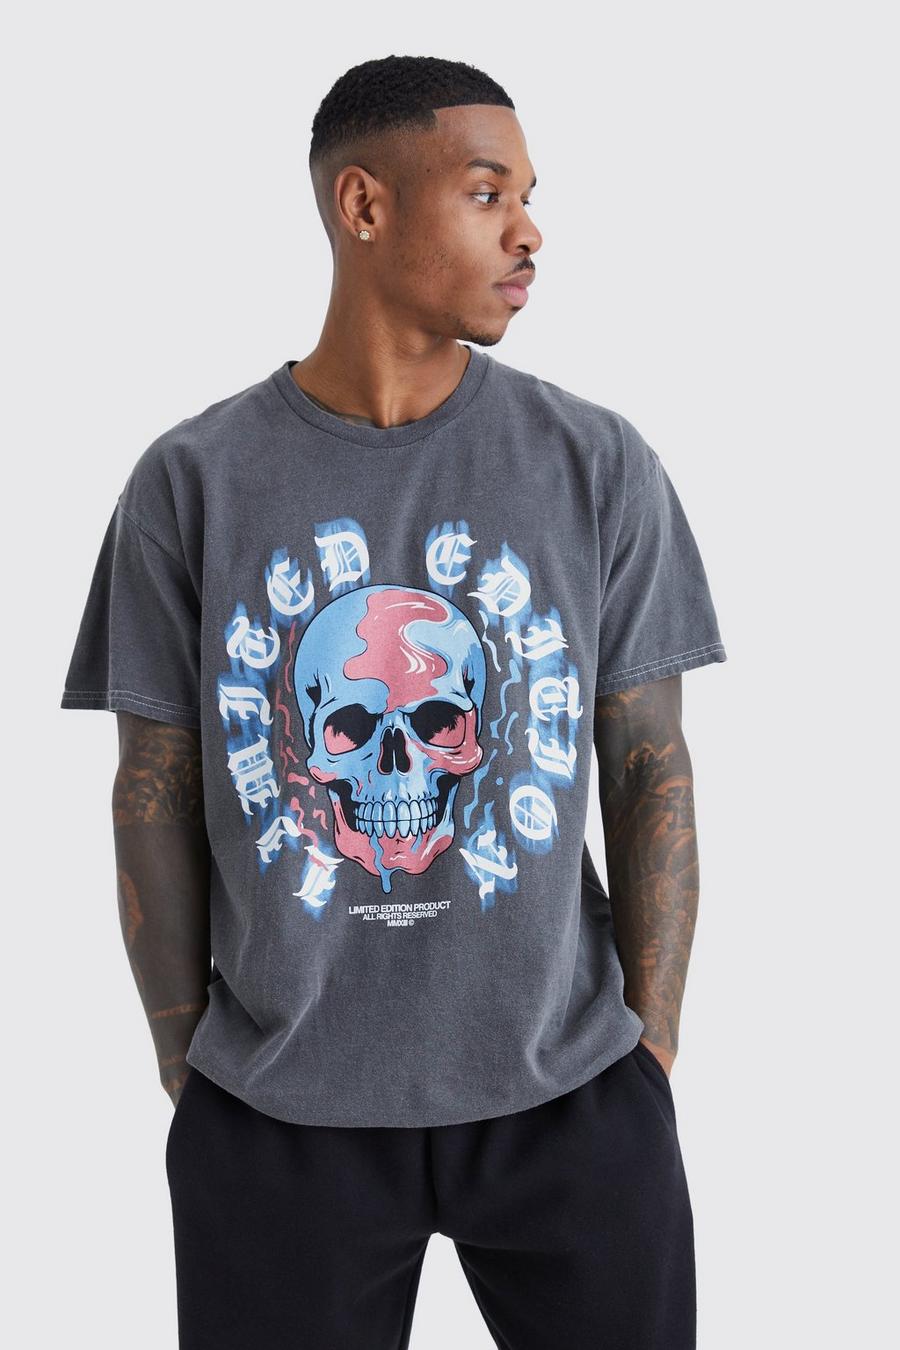 Charcoal grey Oversized Overdyed Drip Skull Gothic T-shirt